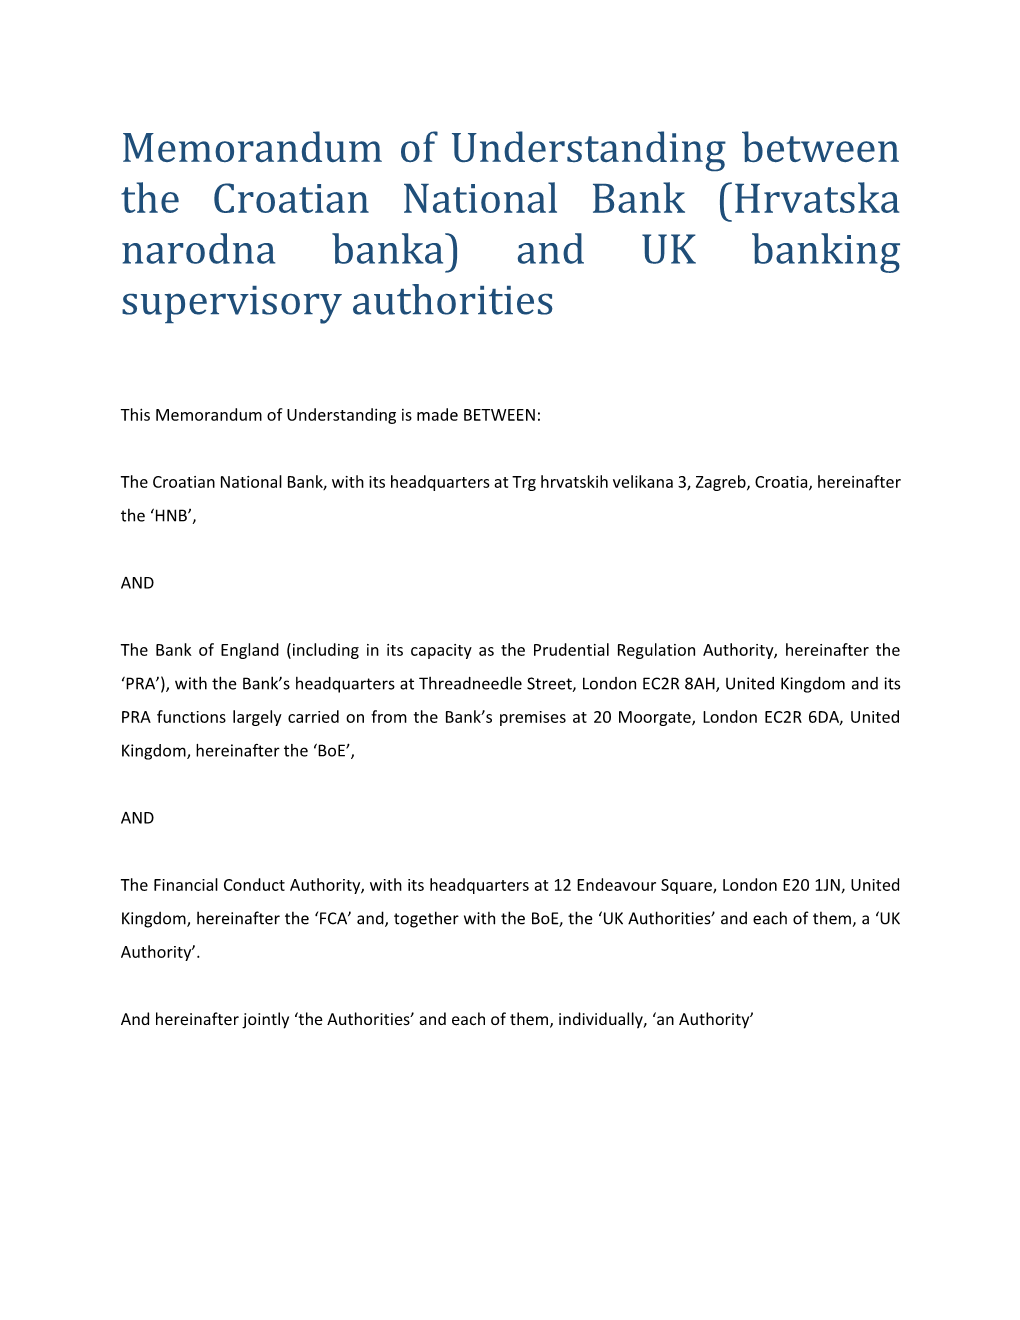 Memorandum of Understanding Between the Croatian National Bank (Hrvatska Narodna Banka) and UK Banking Supervisory Authorities